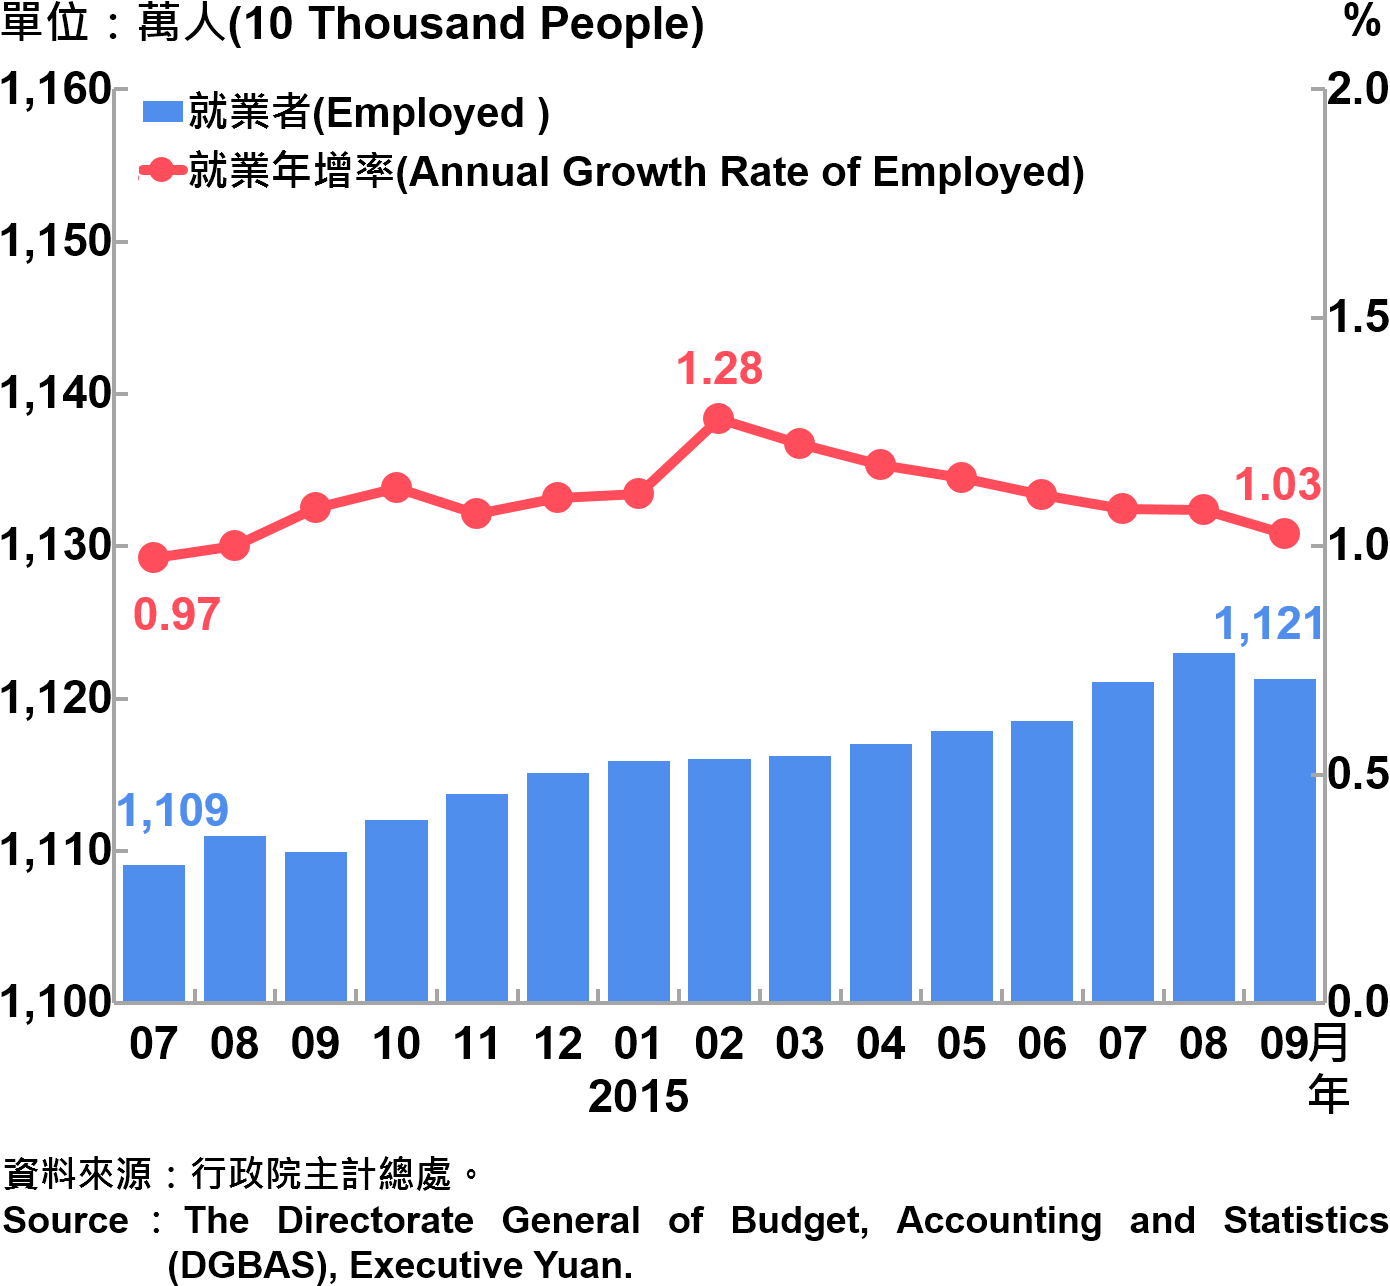 圖6-1：就業及就業年增率 Employment and Annual Growth Rate